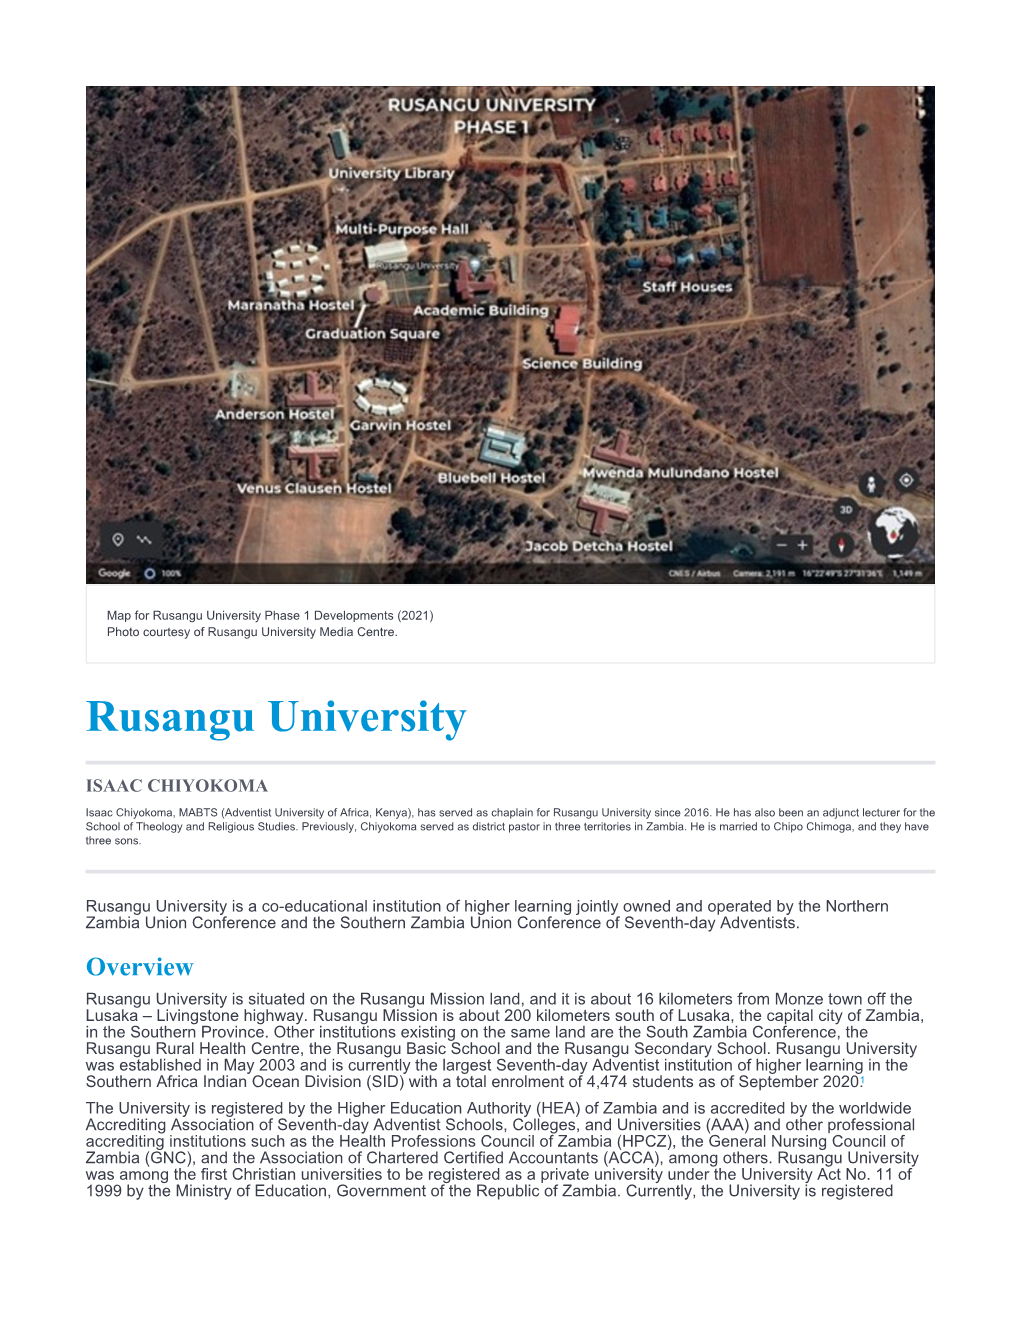 Rusangu University Phase 1 Developments (2021) Photo Courtesy of Rusangu University Media Centre